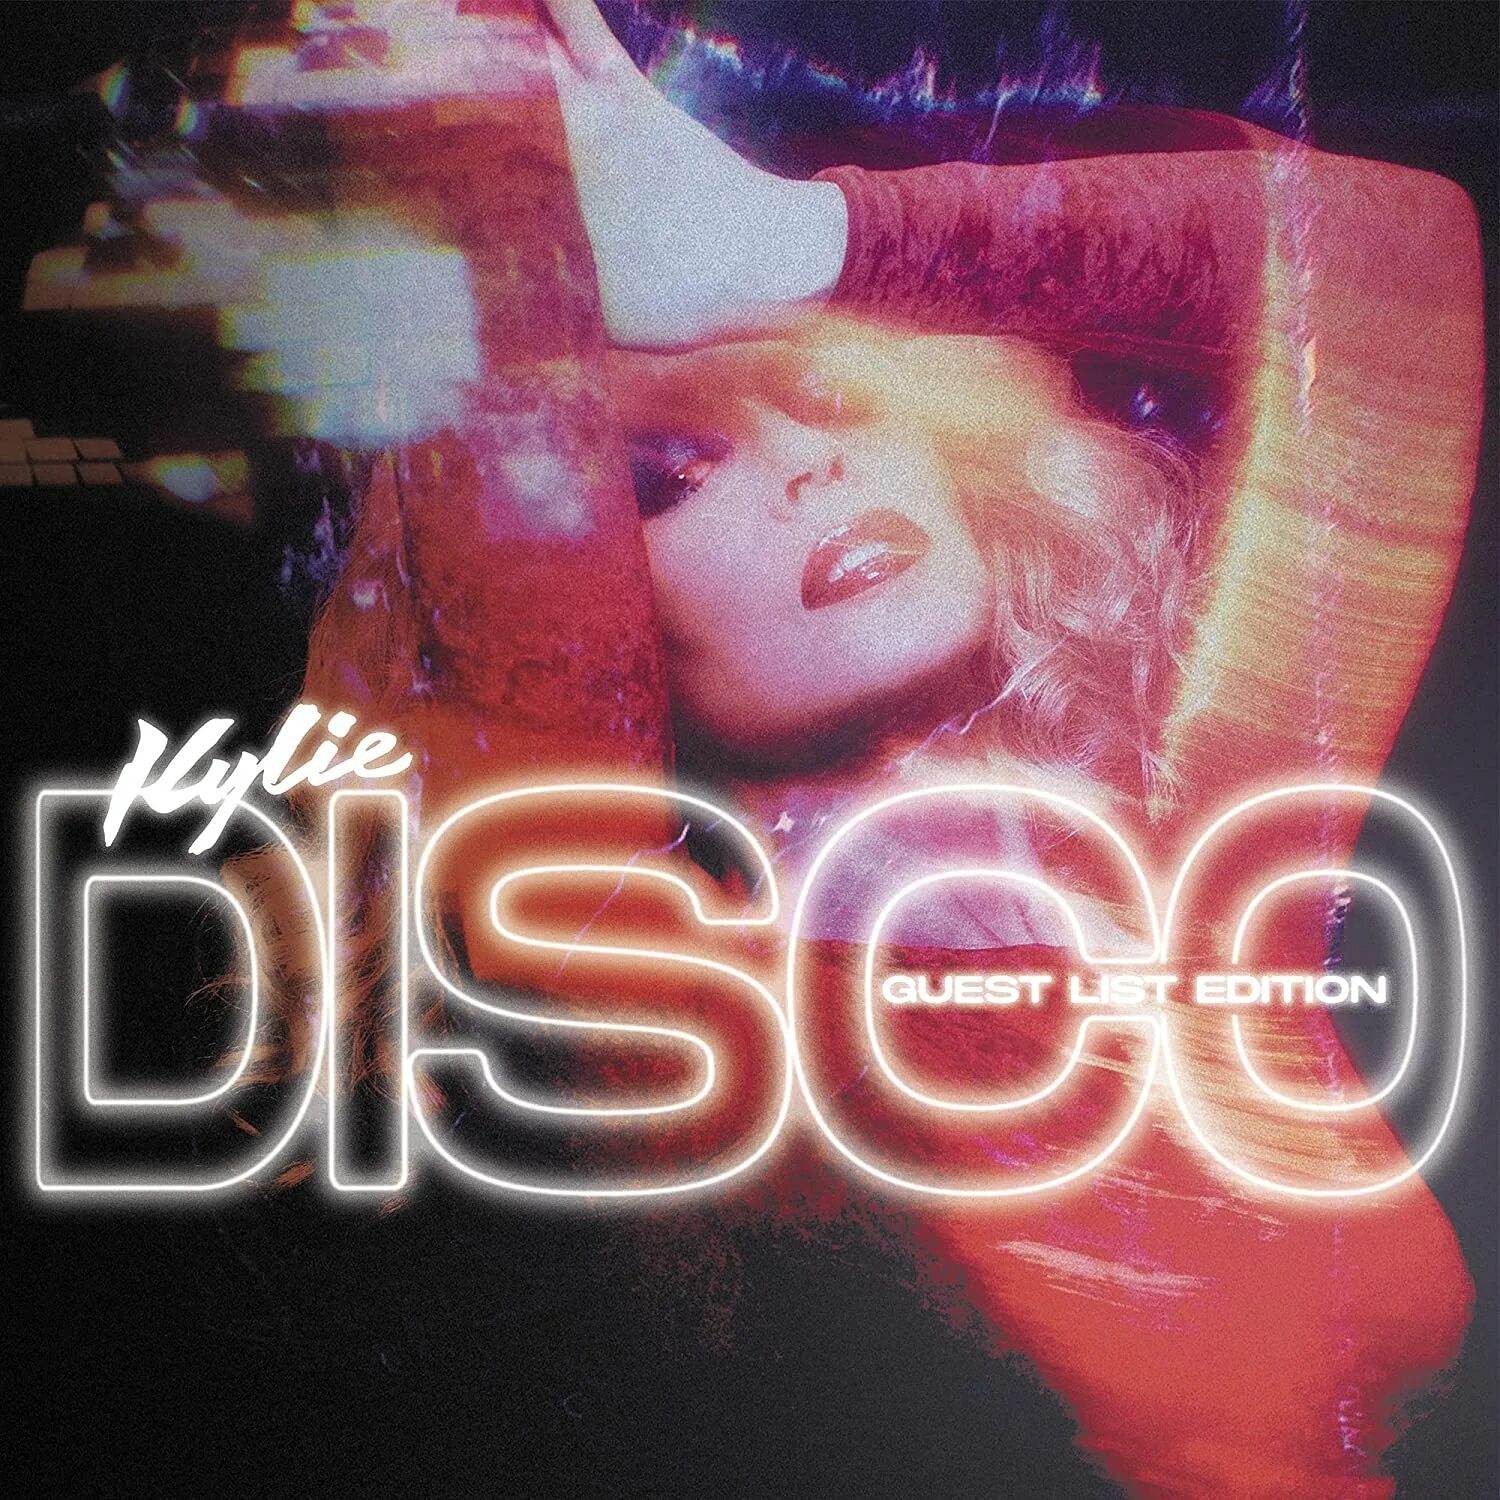 Kylie disco. Kylie Minogue "Disco, CD". Minogue Kylie "Disco". Kylie "Disco (CD)".